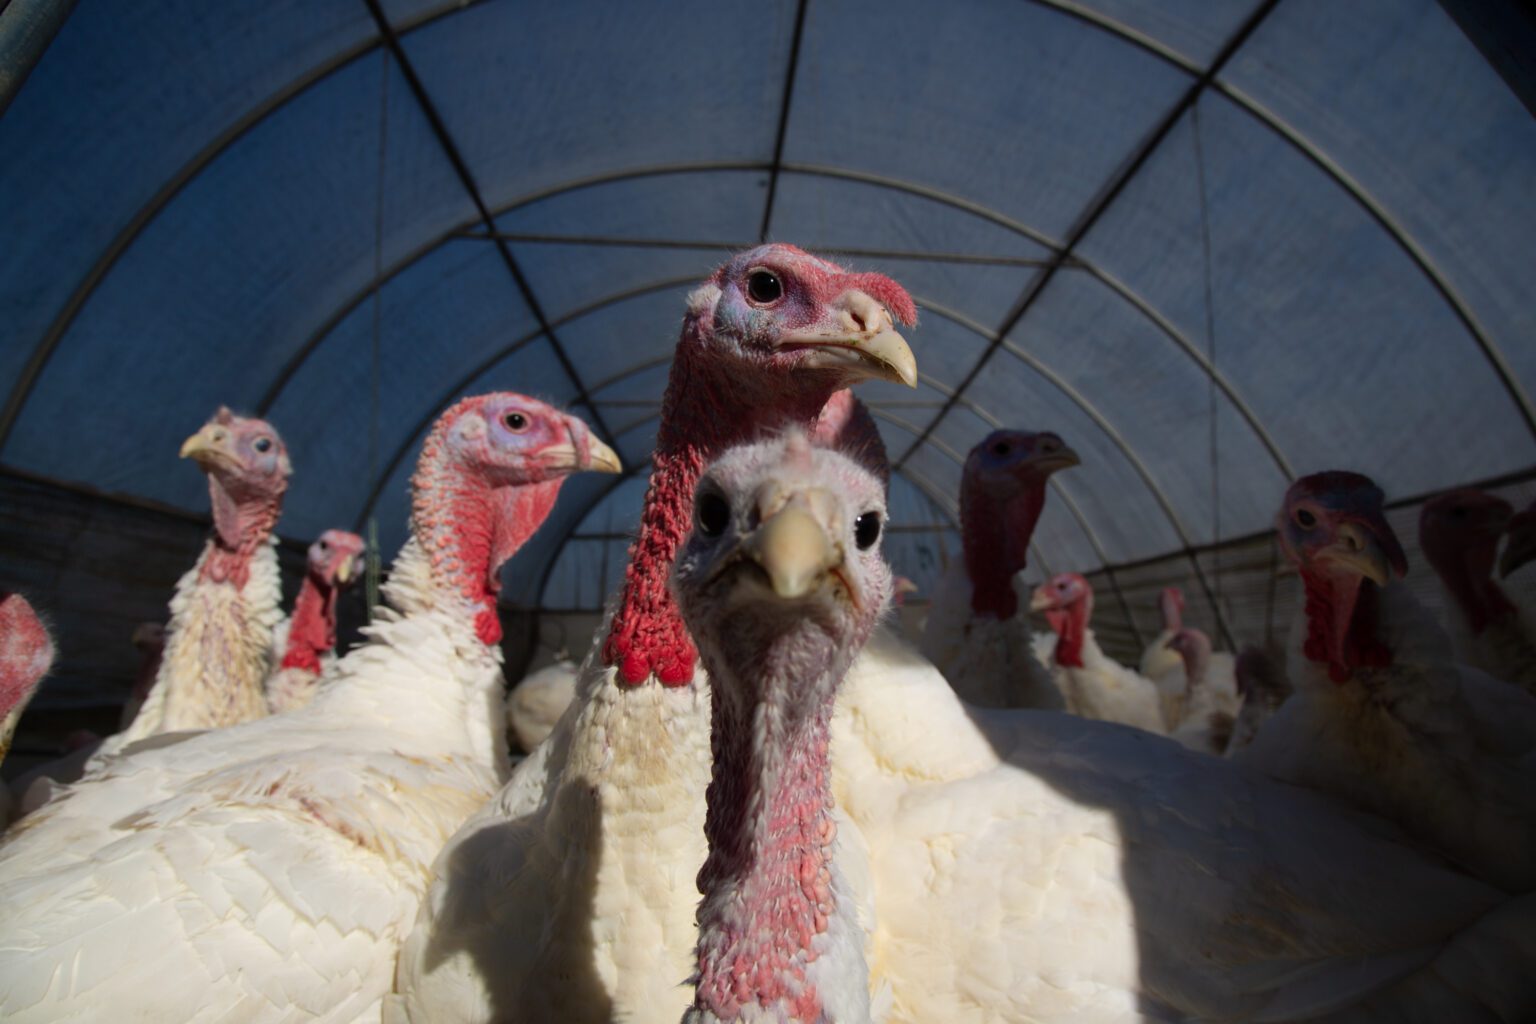 Osprey Hill Farm turkeys roam in their pen on Nov. 9. The farm raises